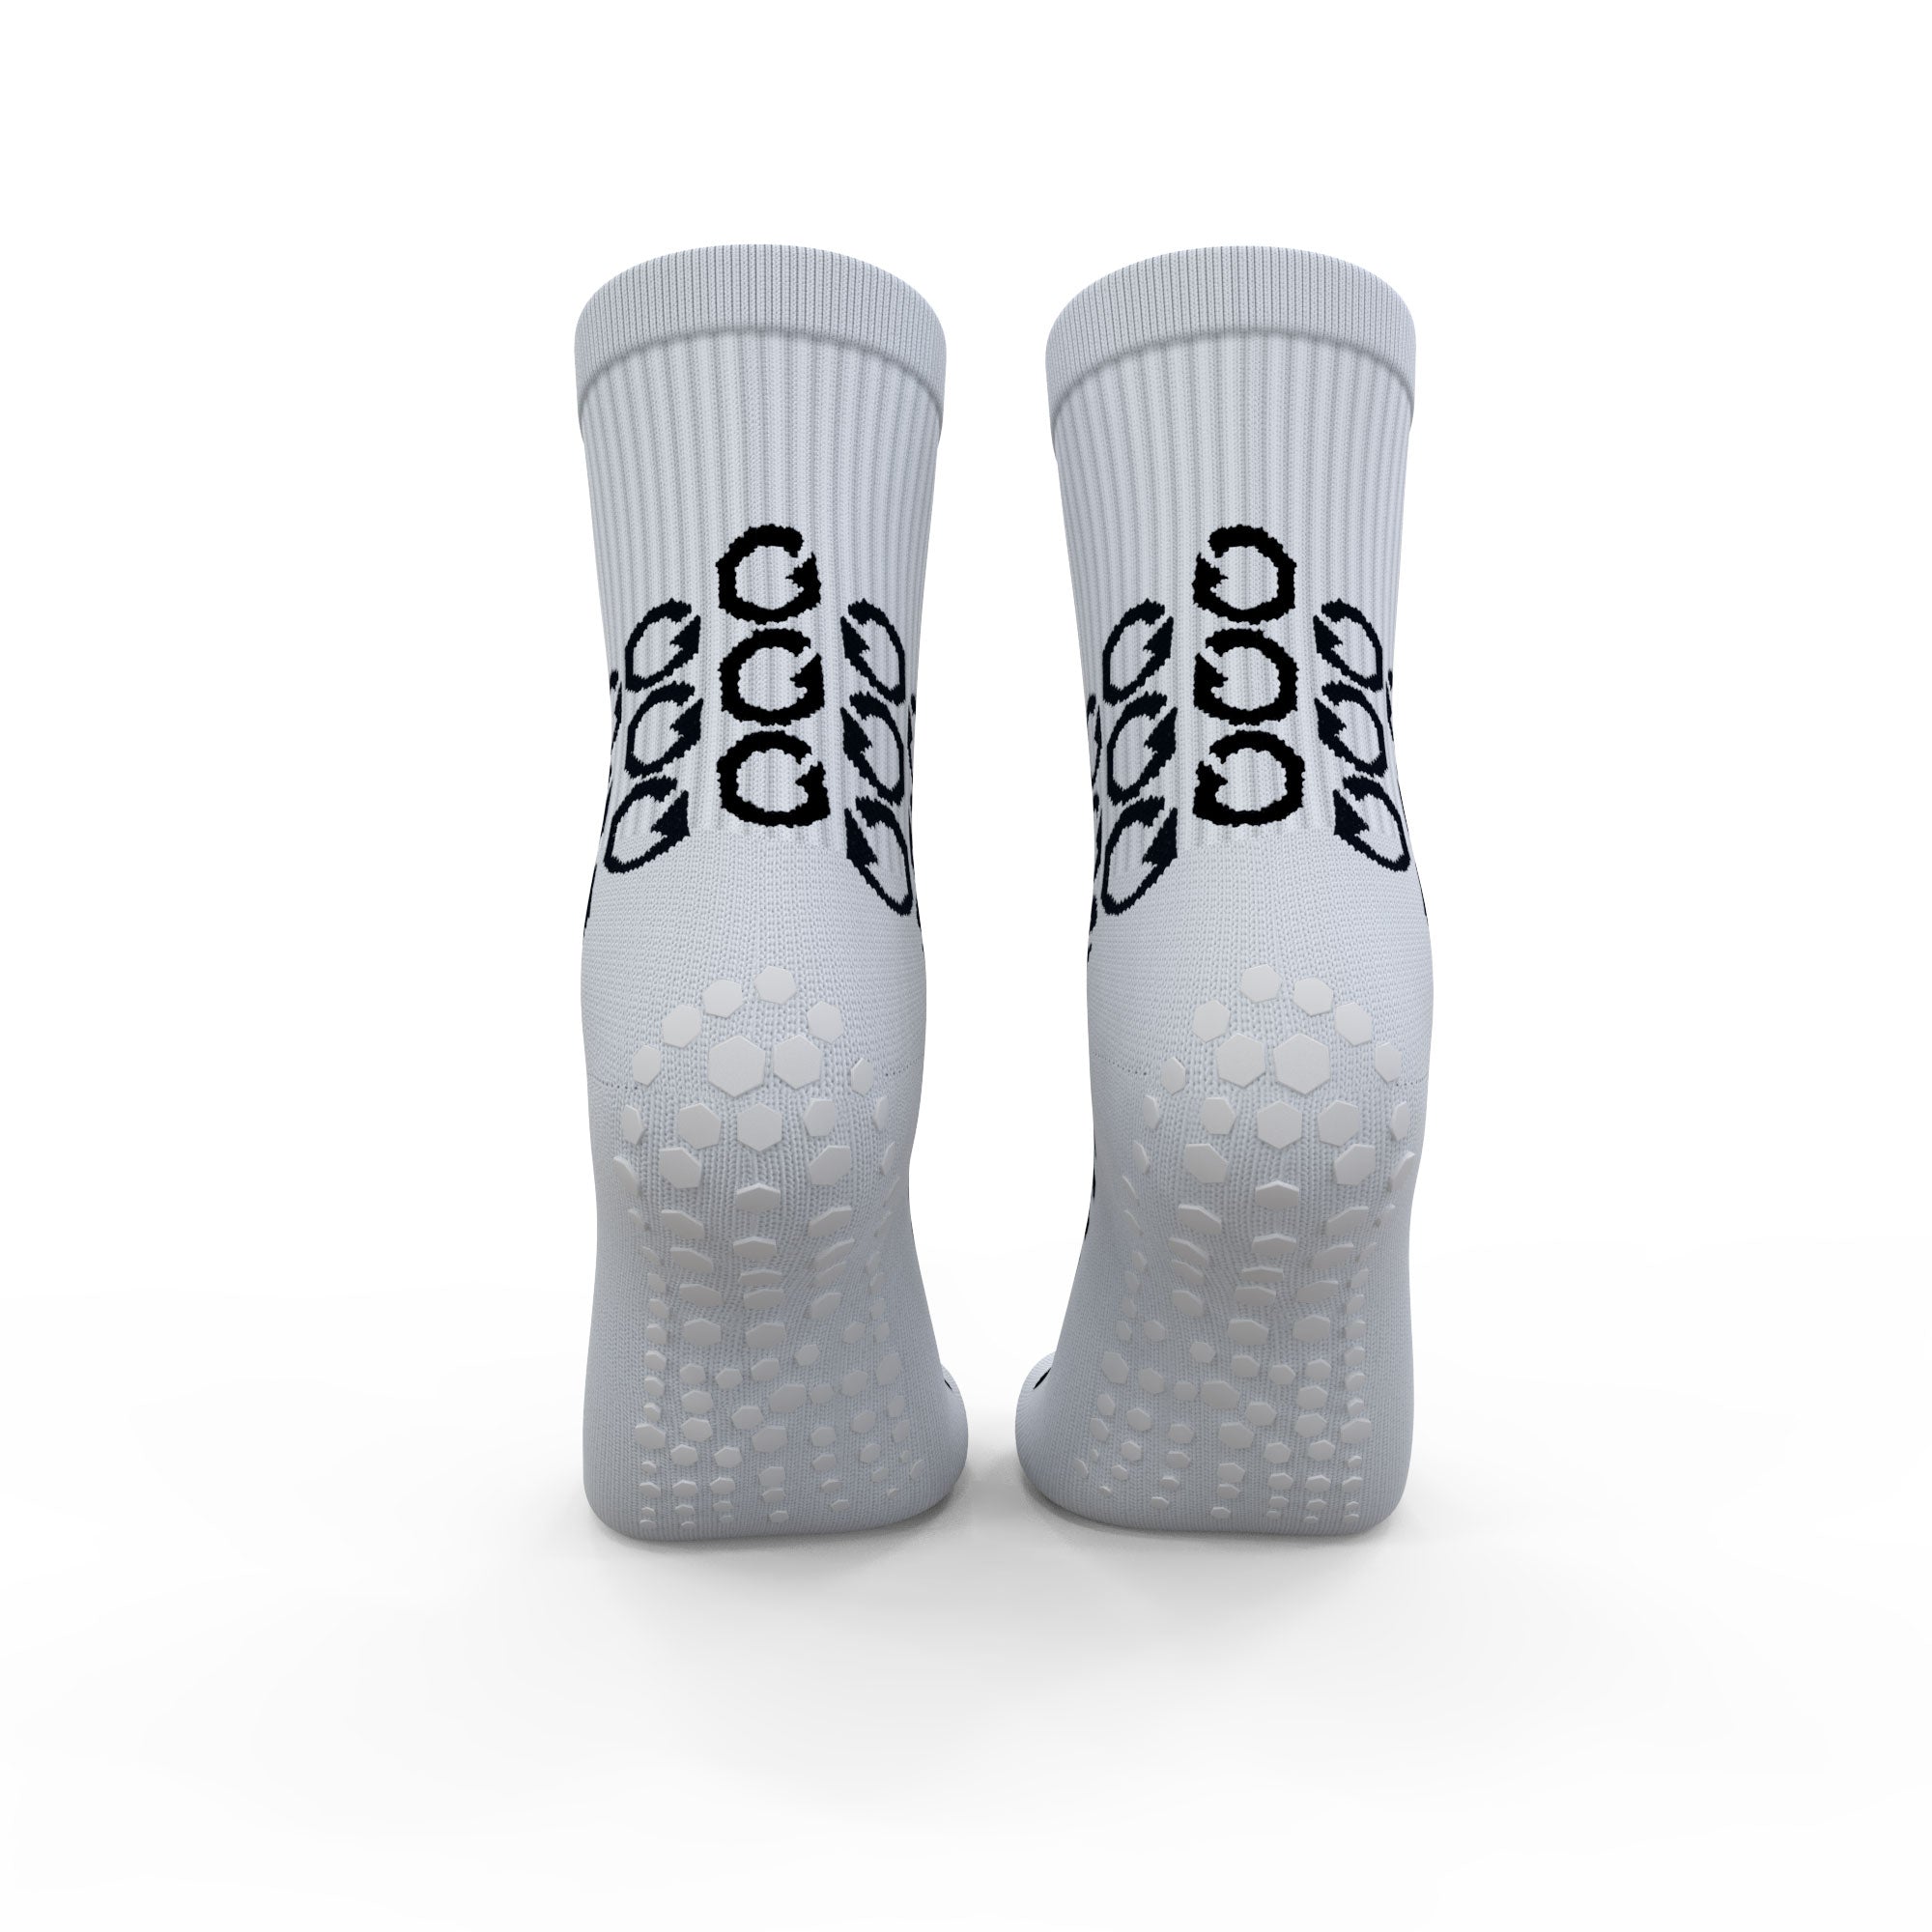 OPTIMA 'TRÆKKRAFT' 1.0 | High Performance Non-Slip Grip Socks